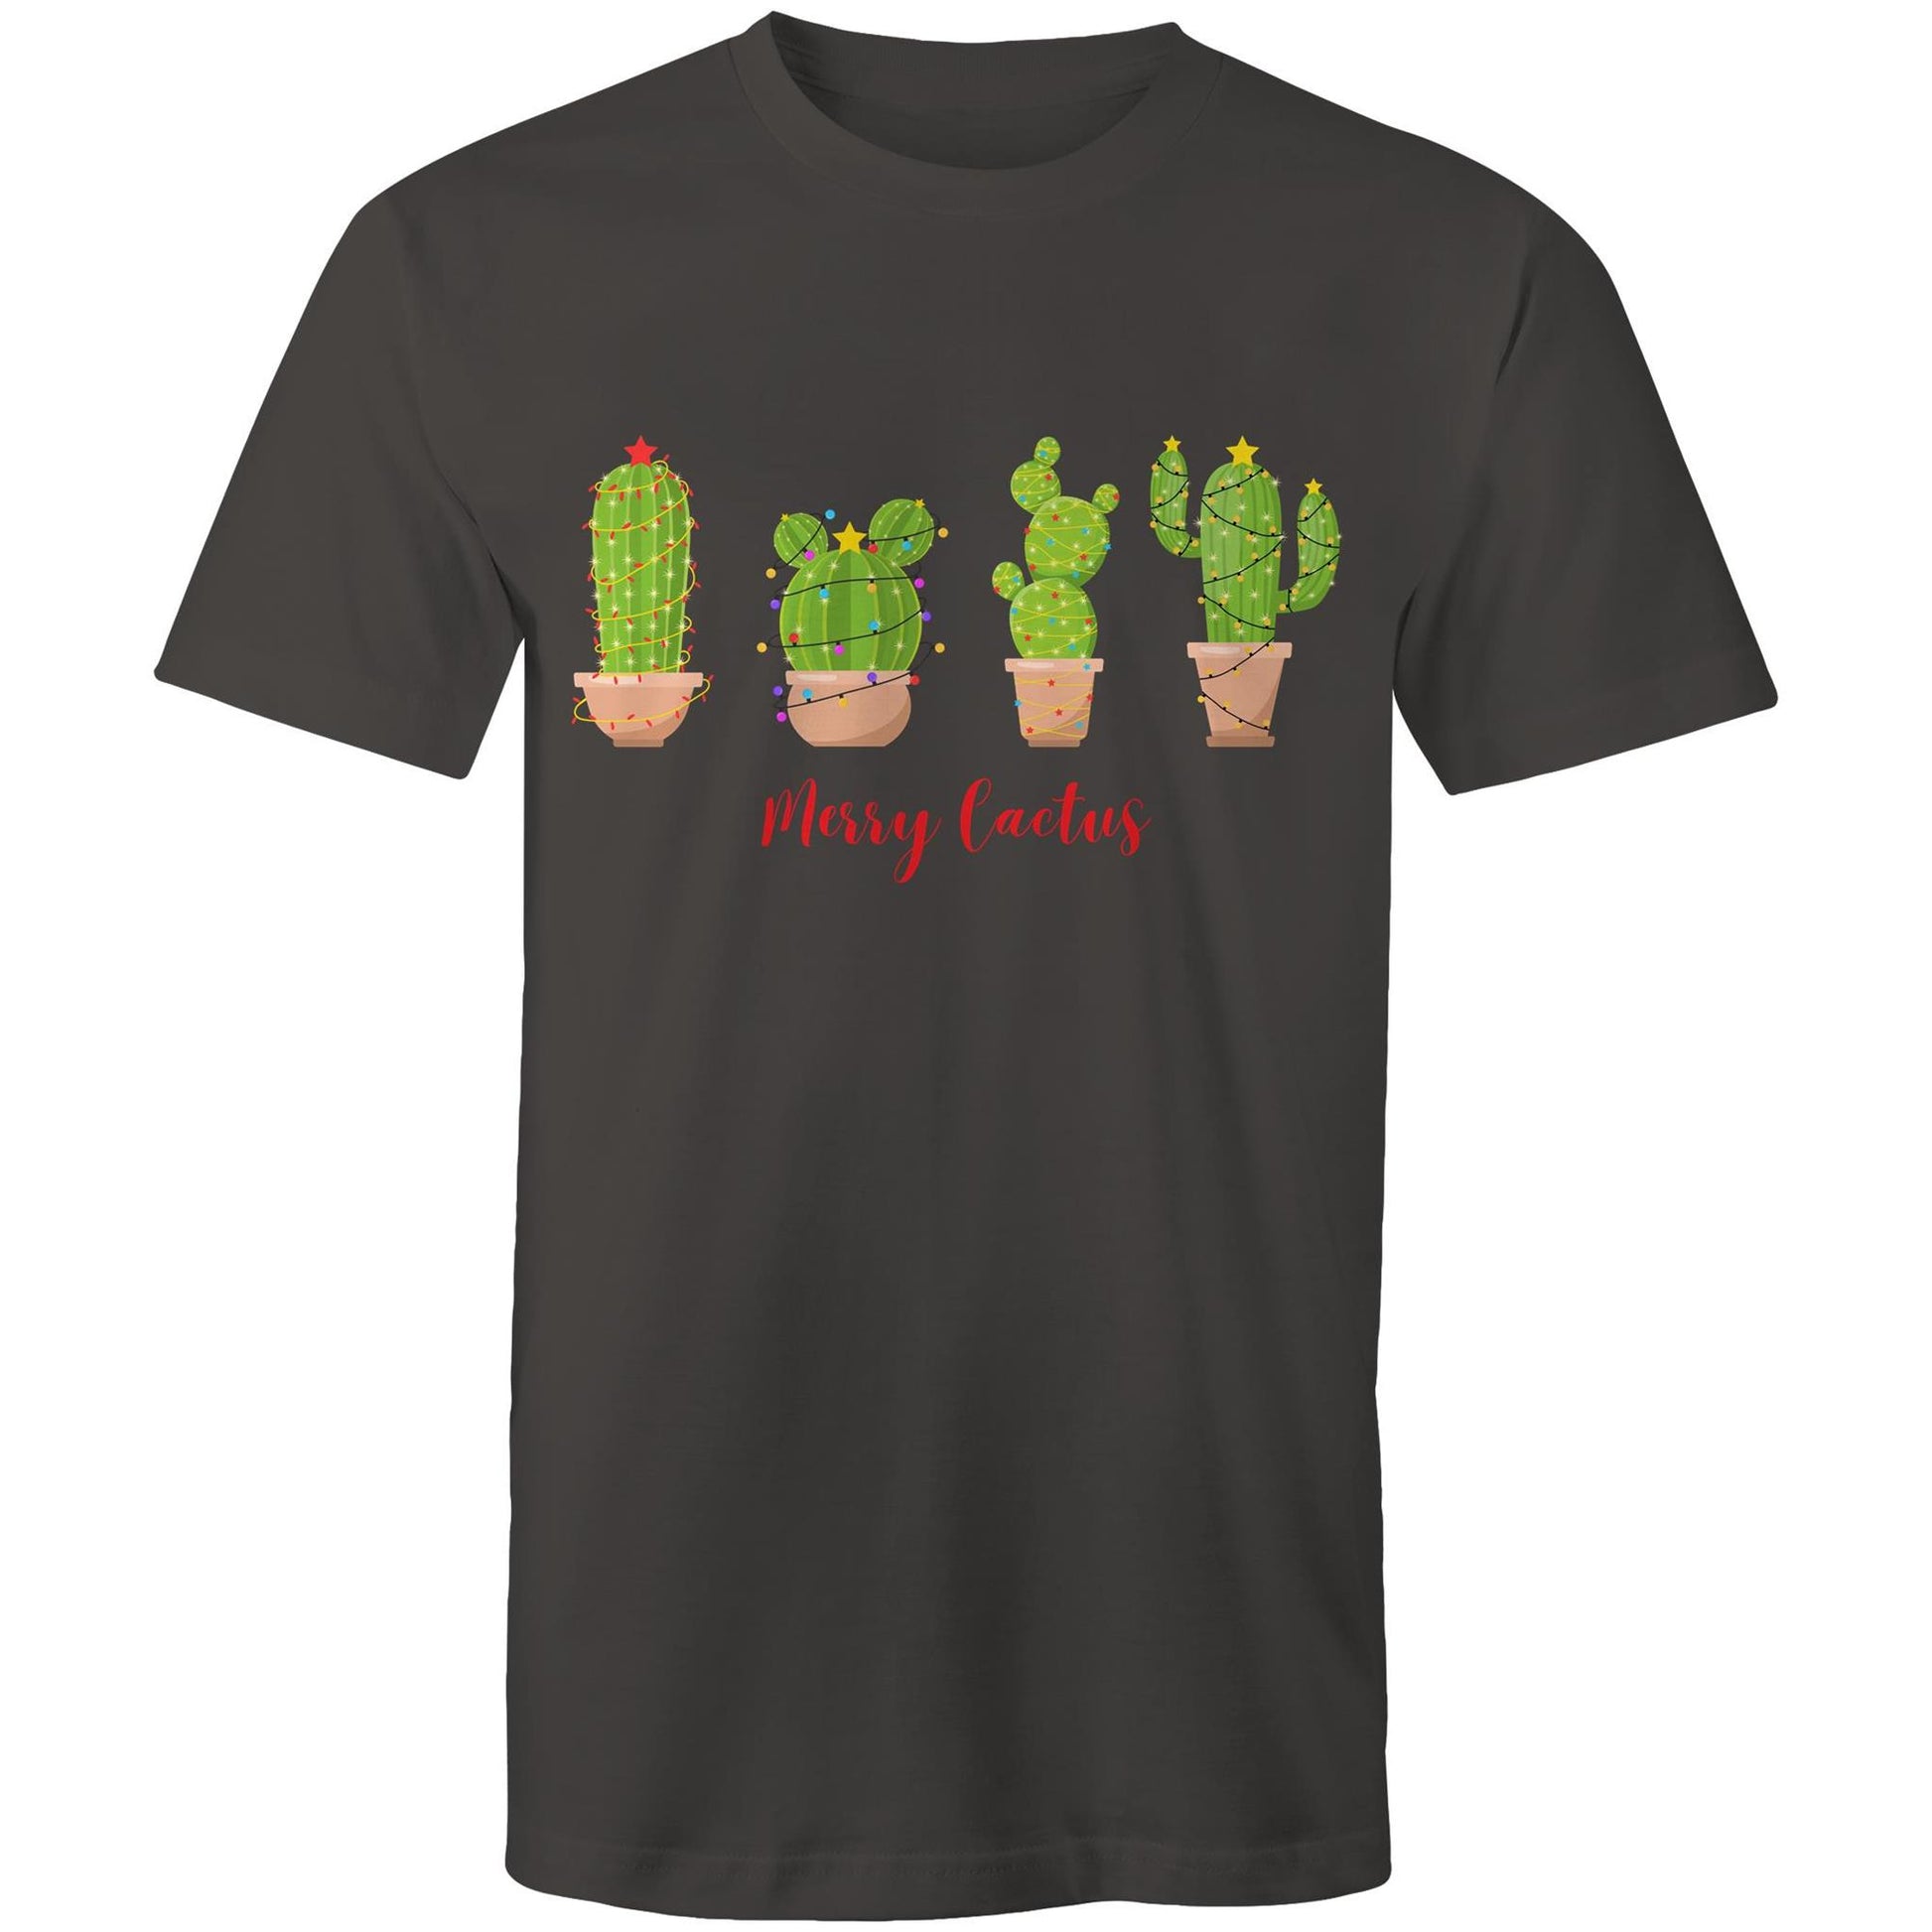 Merry Cactus - Mens T-Shirt Charcoal Christmas Mens T-shirt Merry Christmas